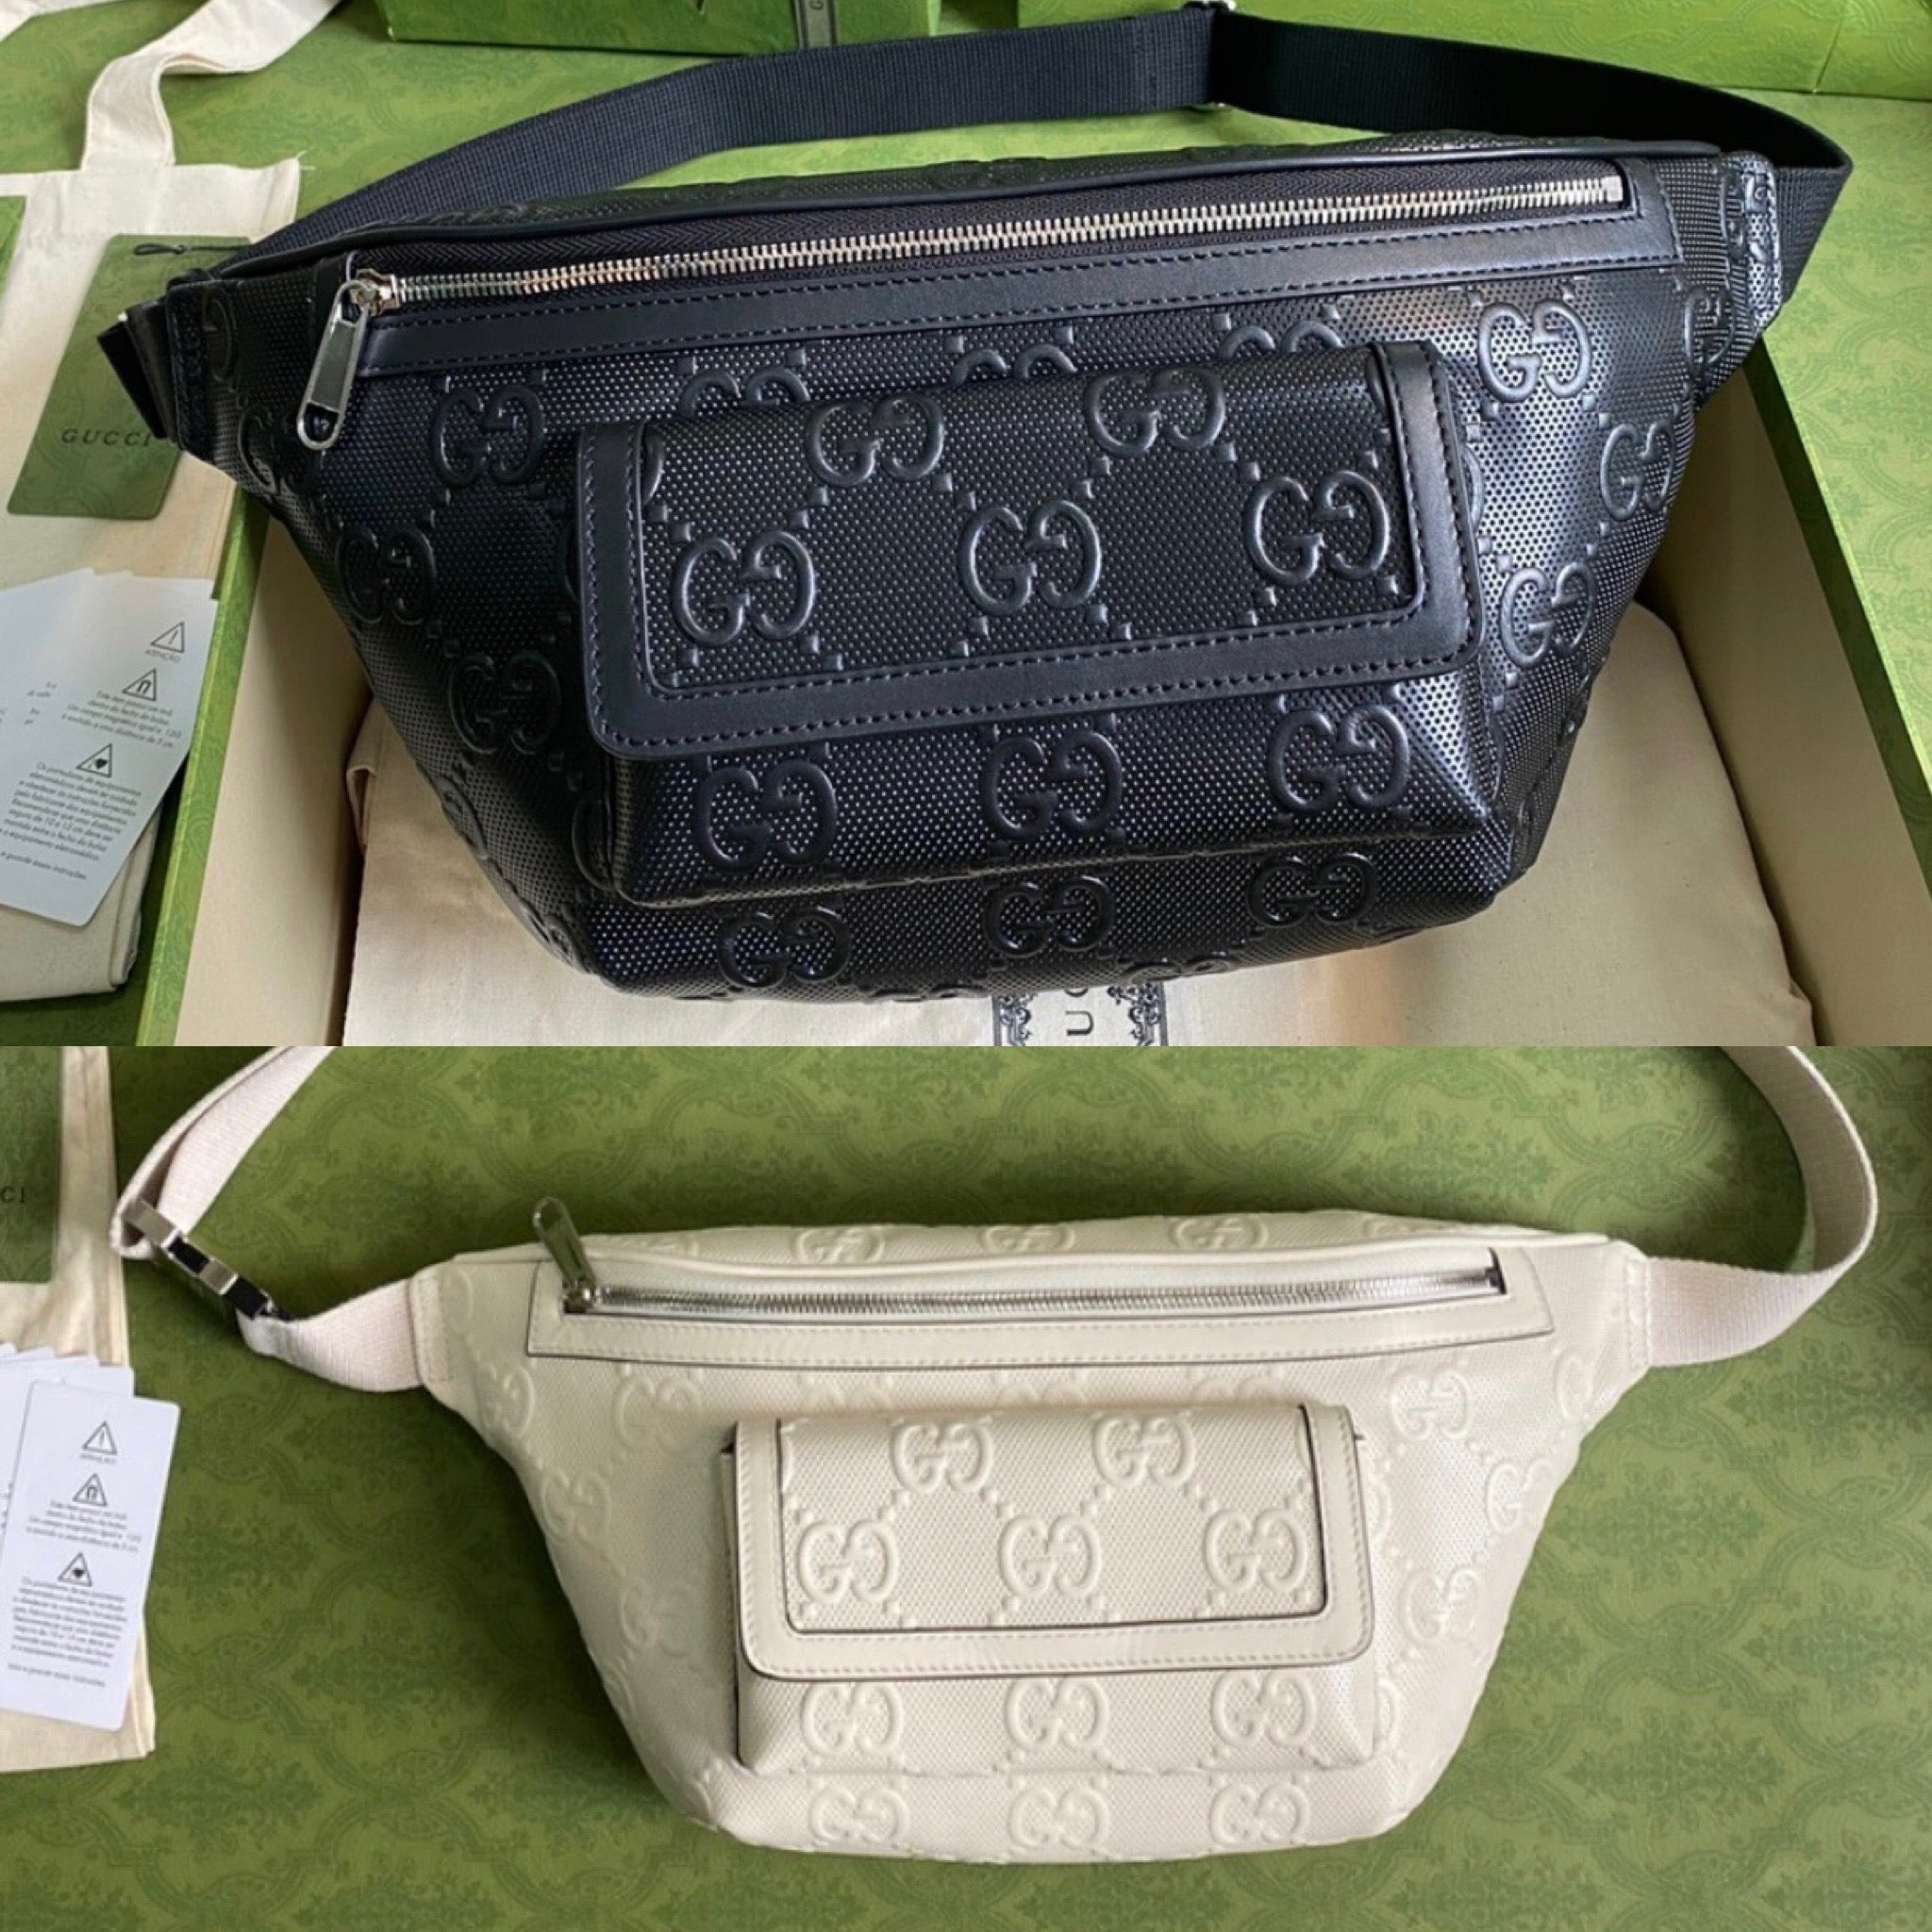 Gucci GG Embossed leather belt bag - ShopStyle